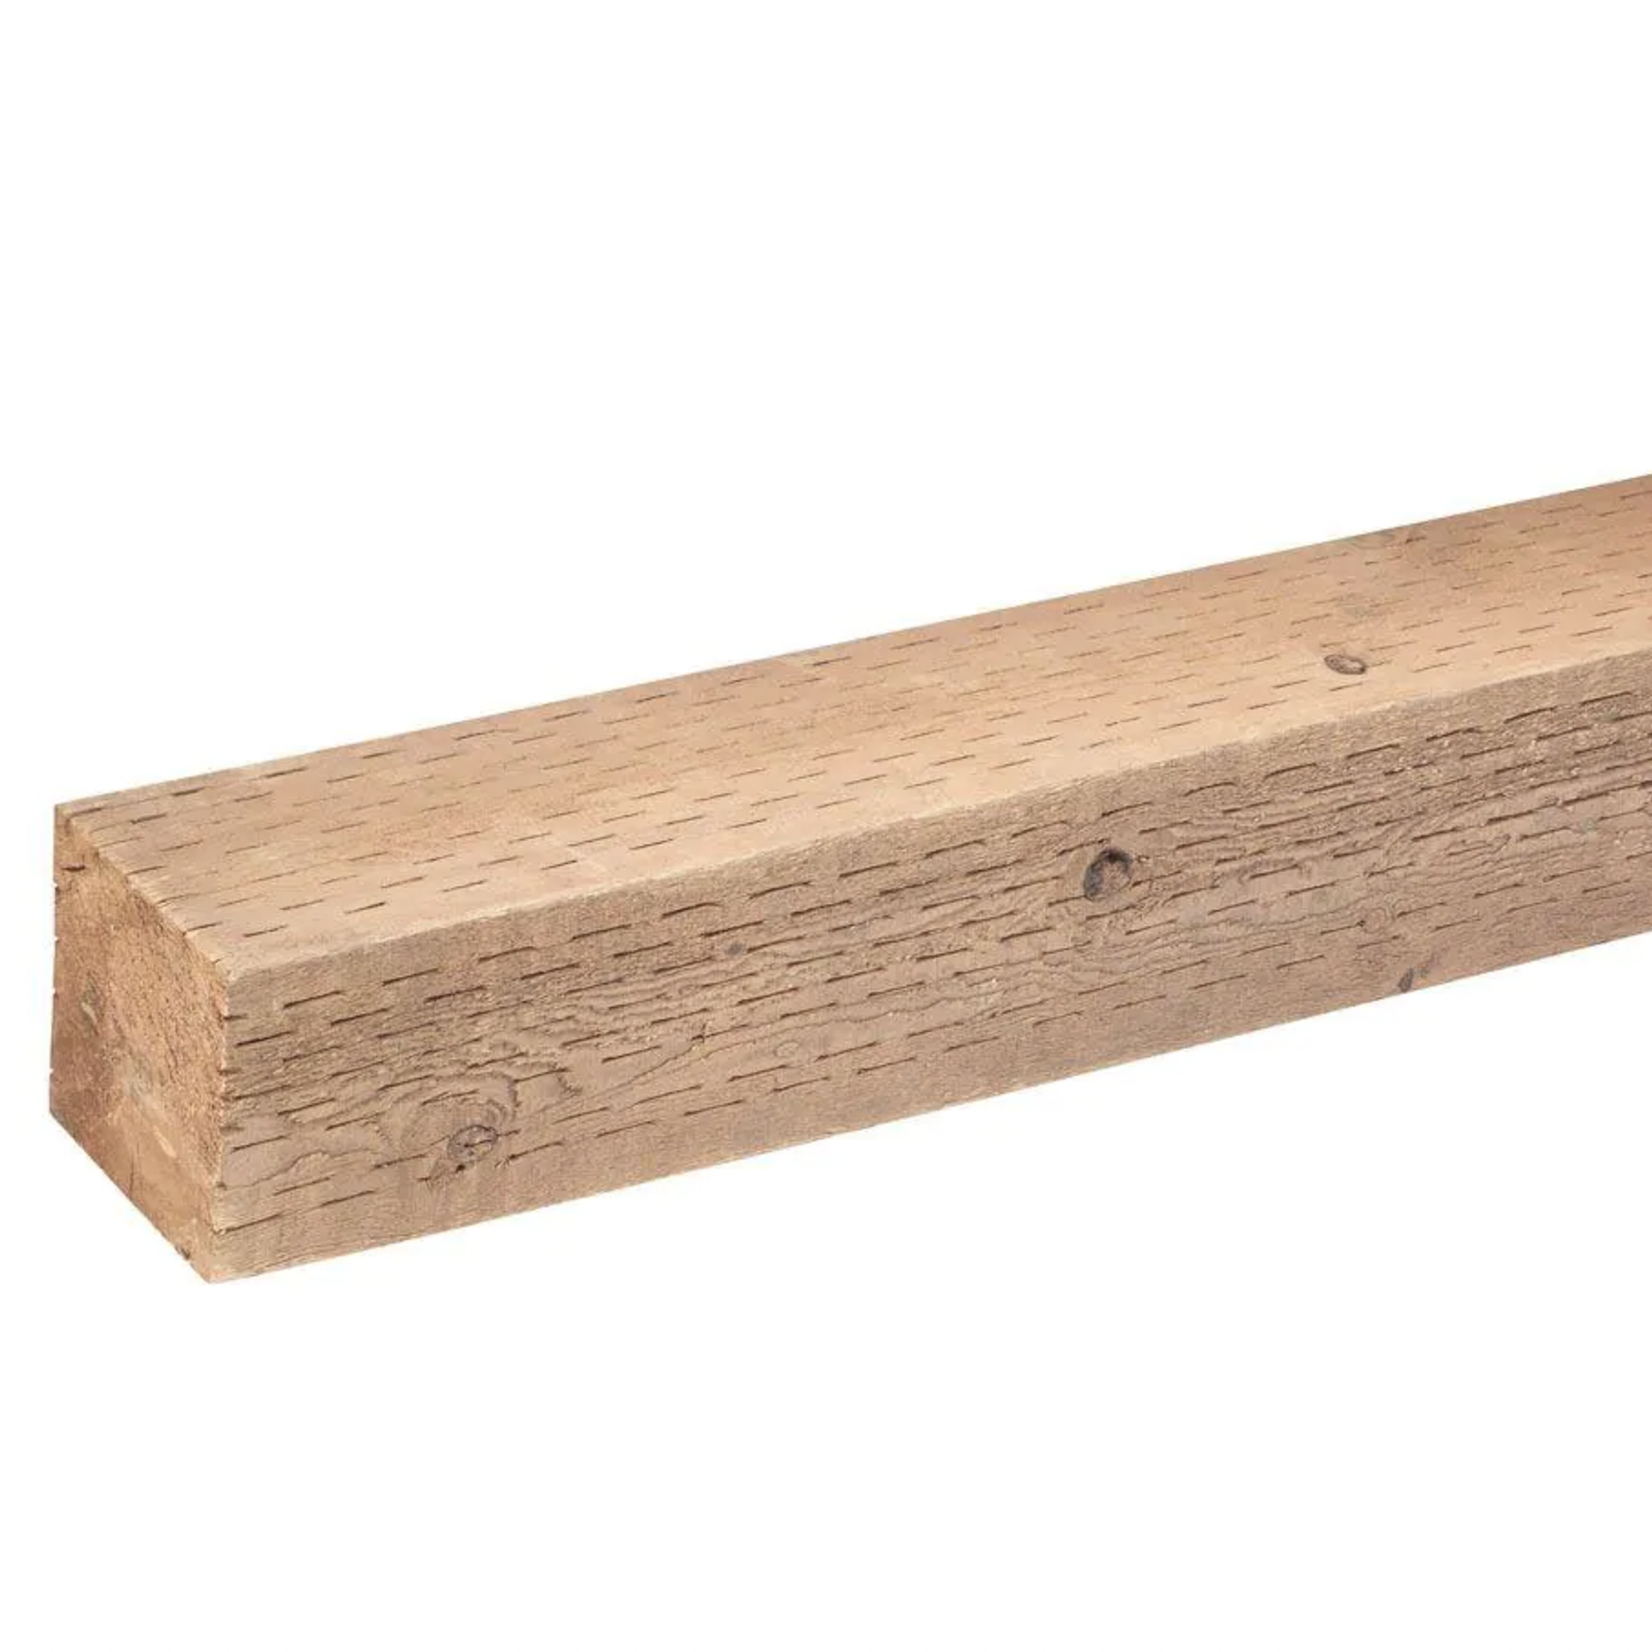 6 in. x 6 in. x 12 ft. Hem/Fir Pressure-Treated Lumber